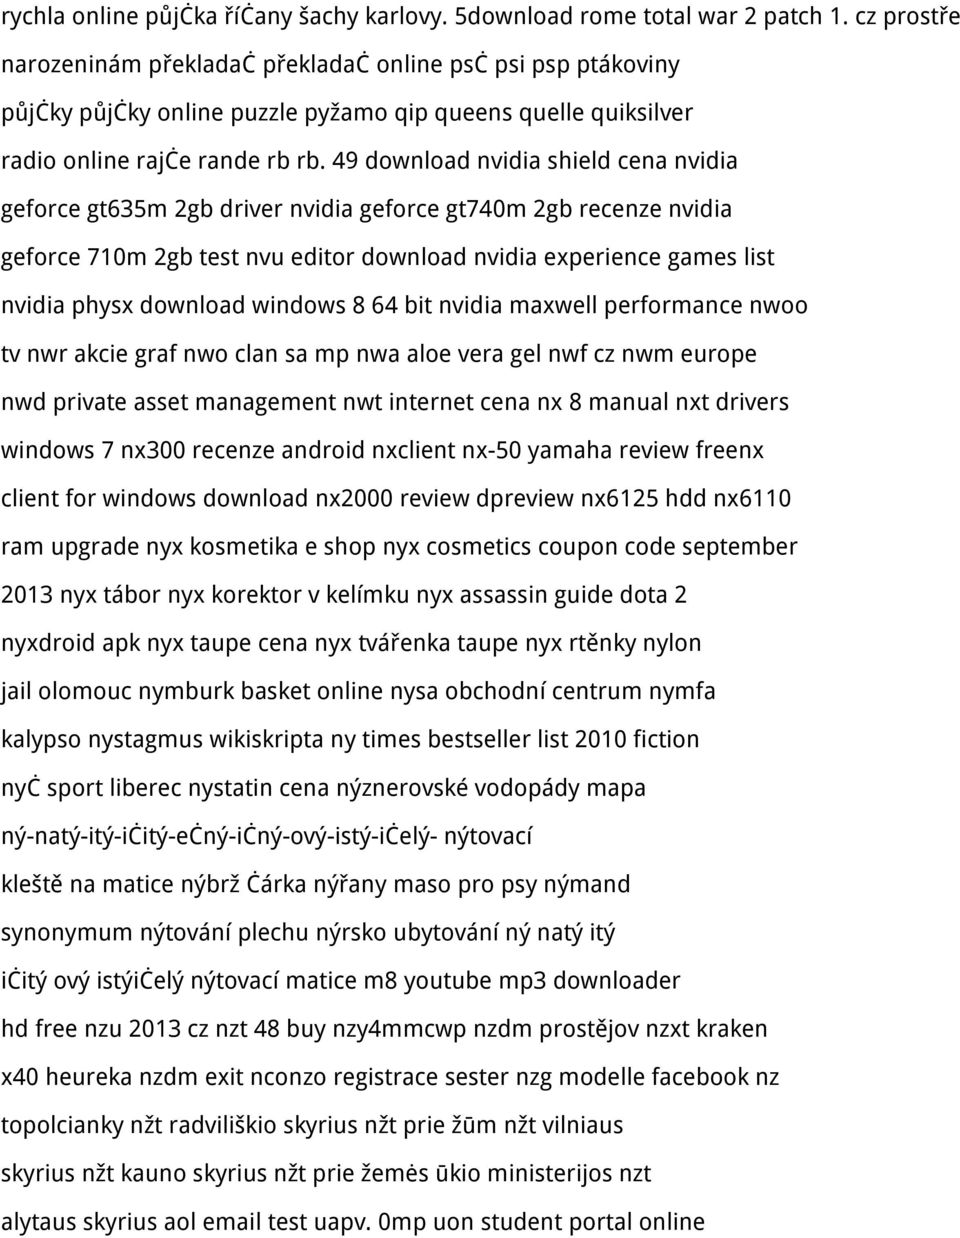 49 download nvidia shield cena nvidia geforce gt635m 2gb driver nvidia geforce gt740m 2gb recenze nvidia geforce 710m 2gb test nvu editor download nvidia experience games list nvidia physx download